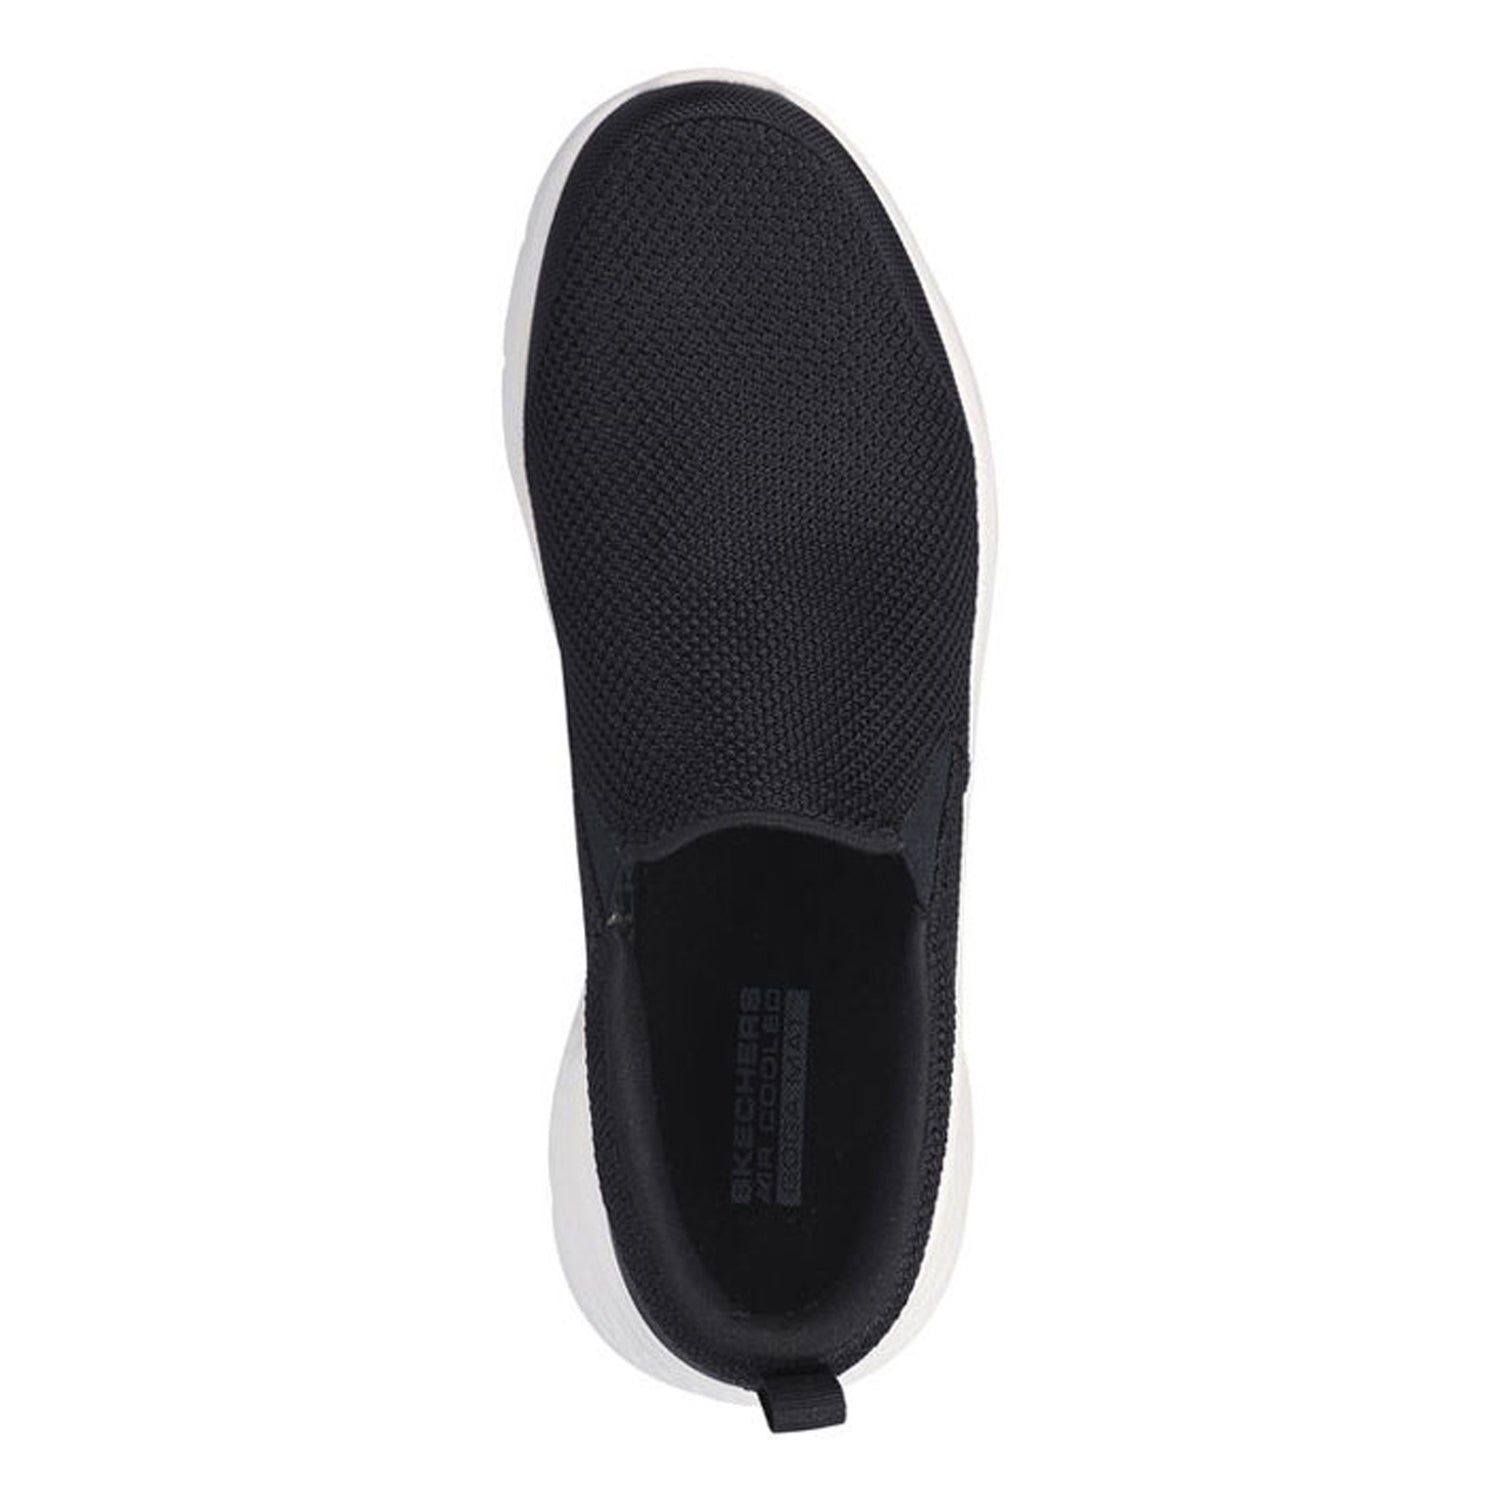 Peltz Shoes  Men's Skechers GO WALK Flex - Impeccable II Walking Shoe Black White 216492-BKW